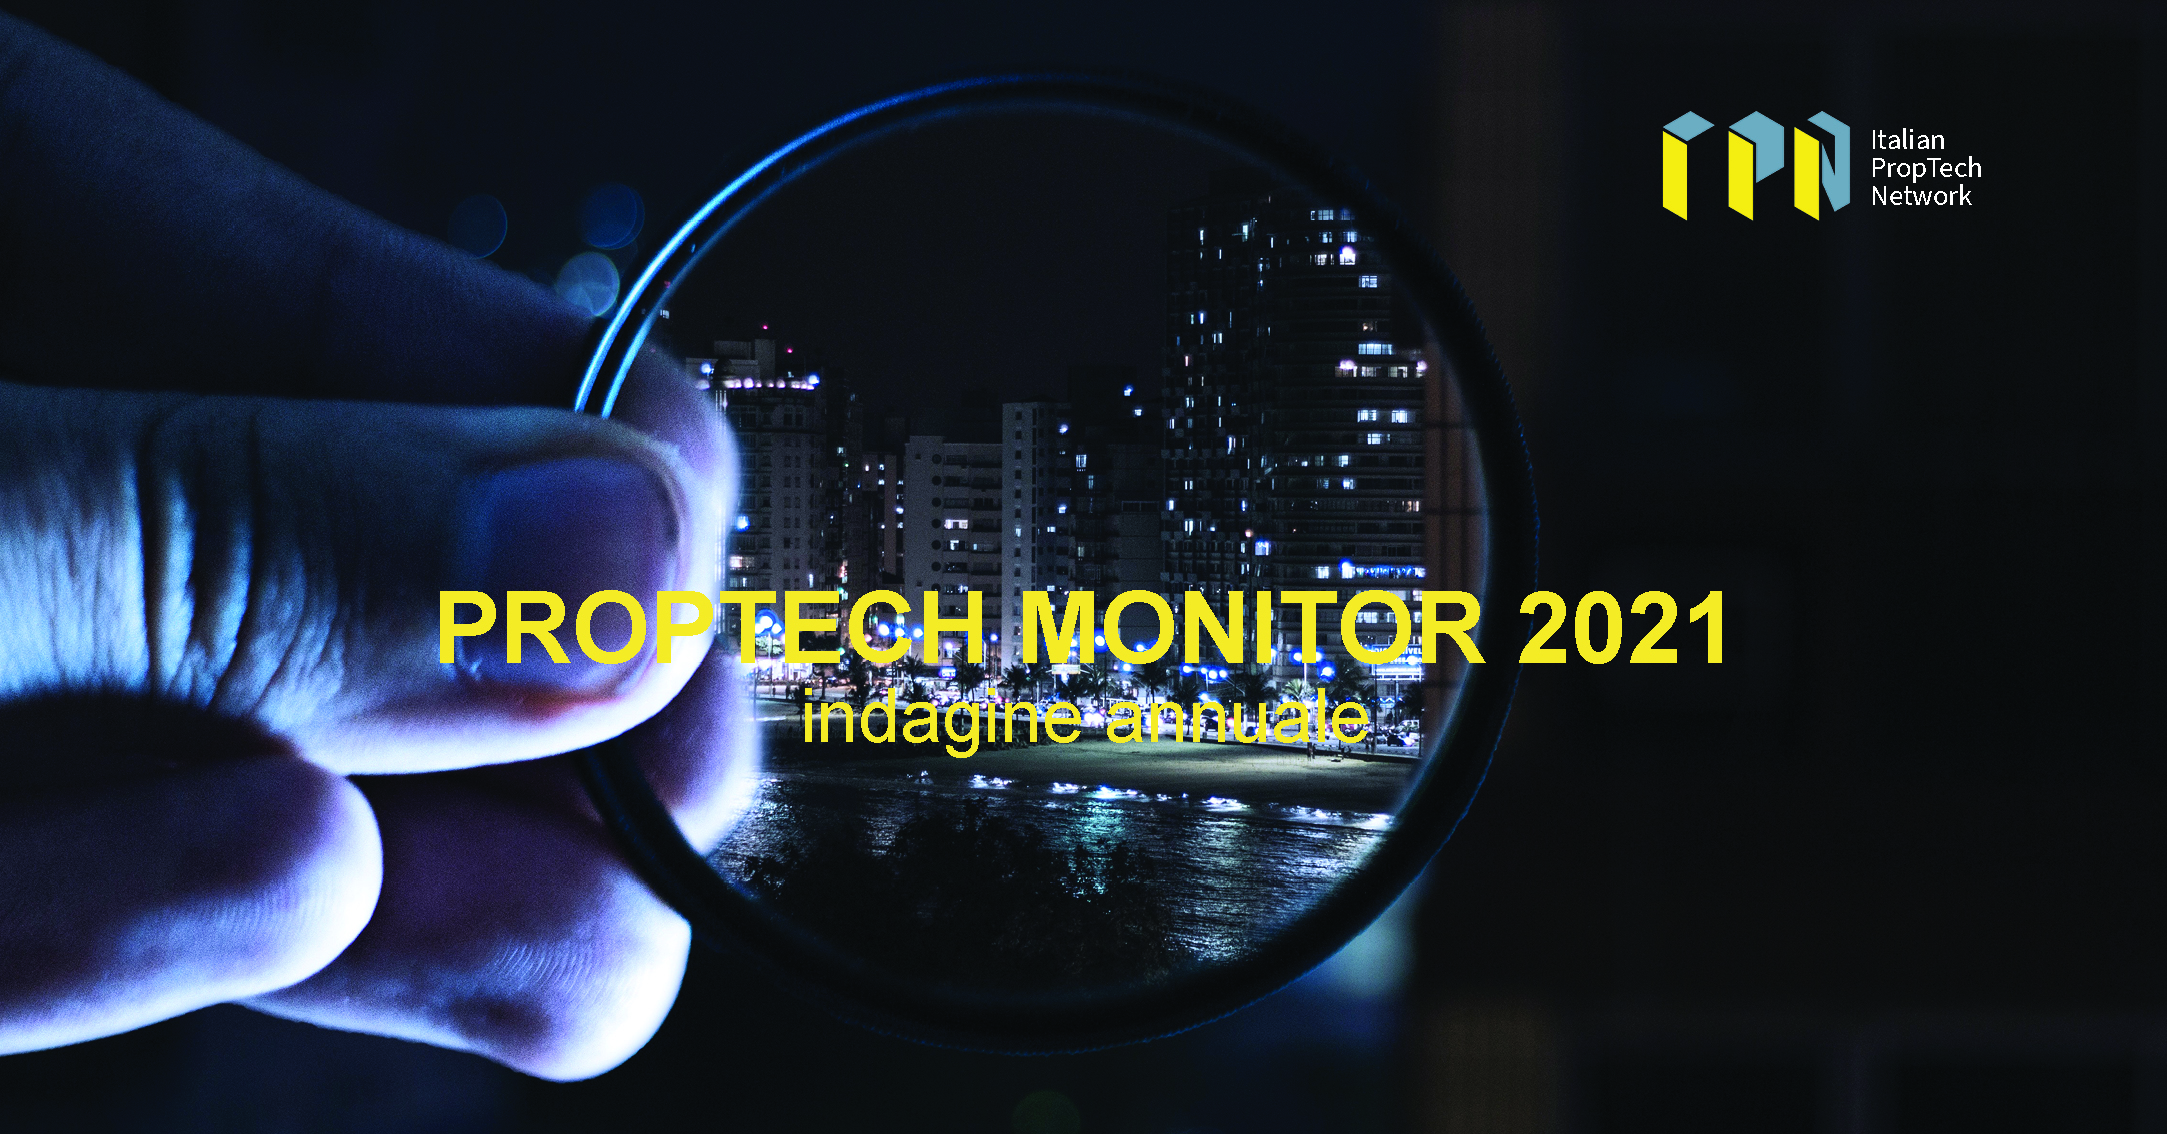 INDAGINE ANNUALE: PropTech Monitor 2021